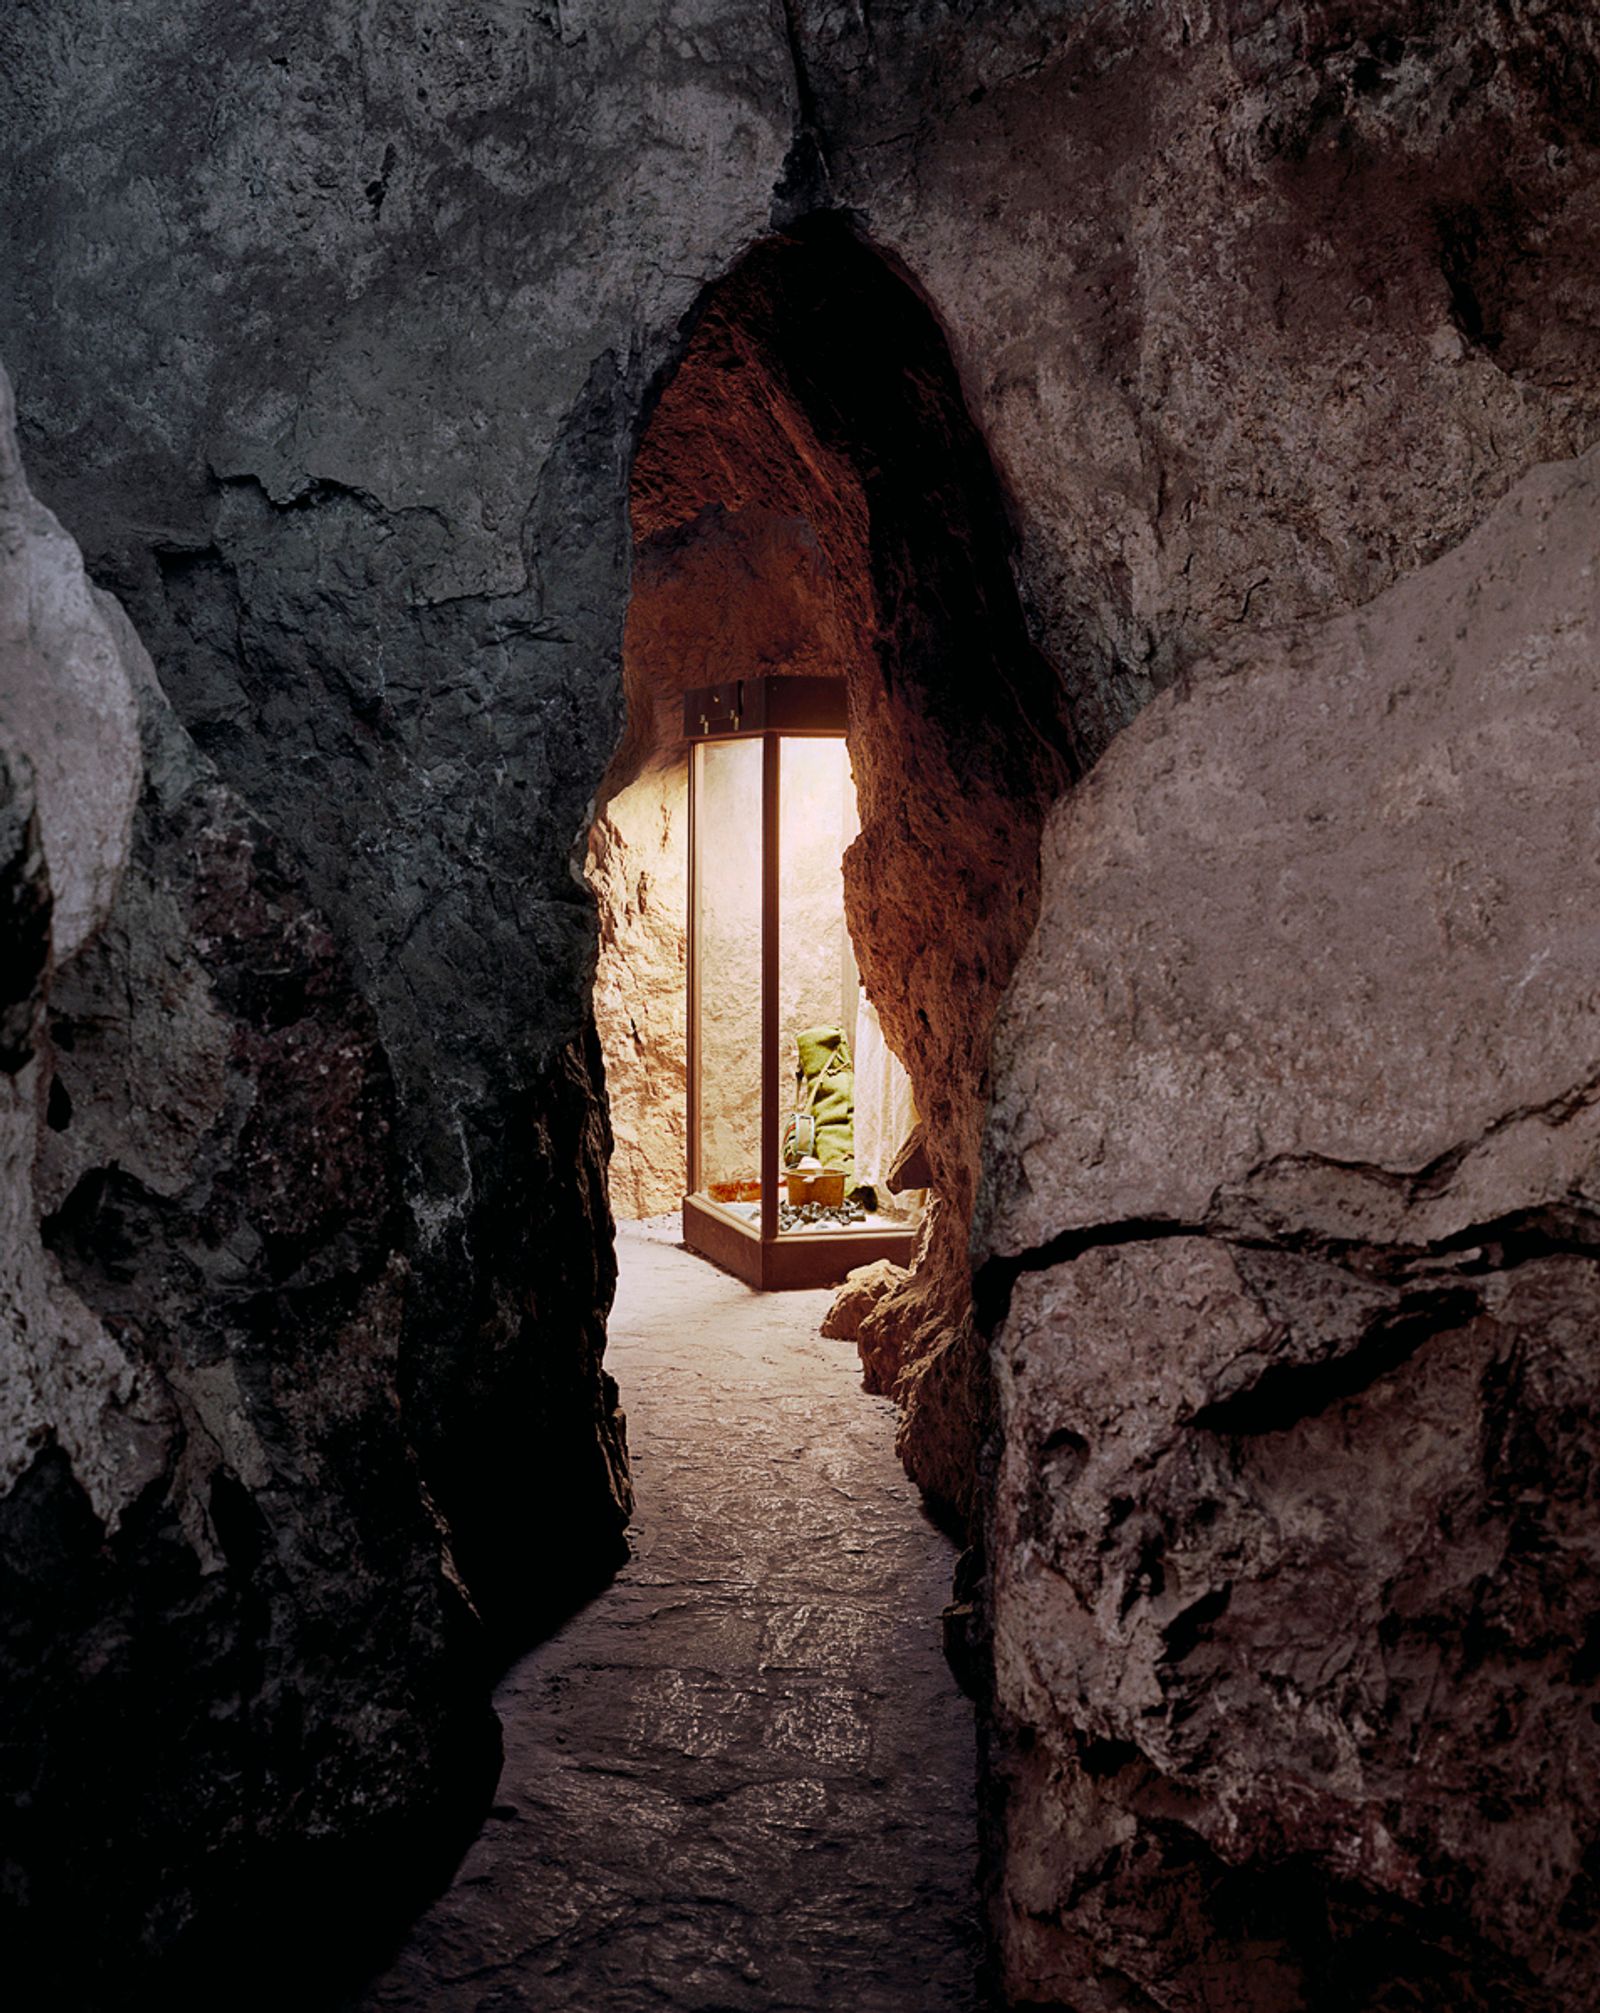 © Austin Irving - Colossal Cave, Display No. 2, Vail, AZ, 2013